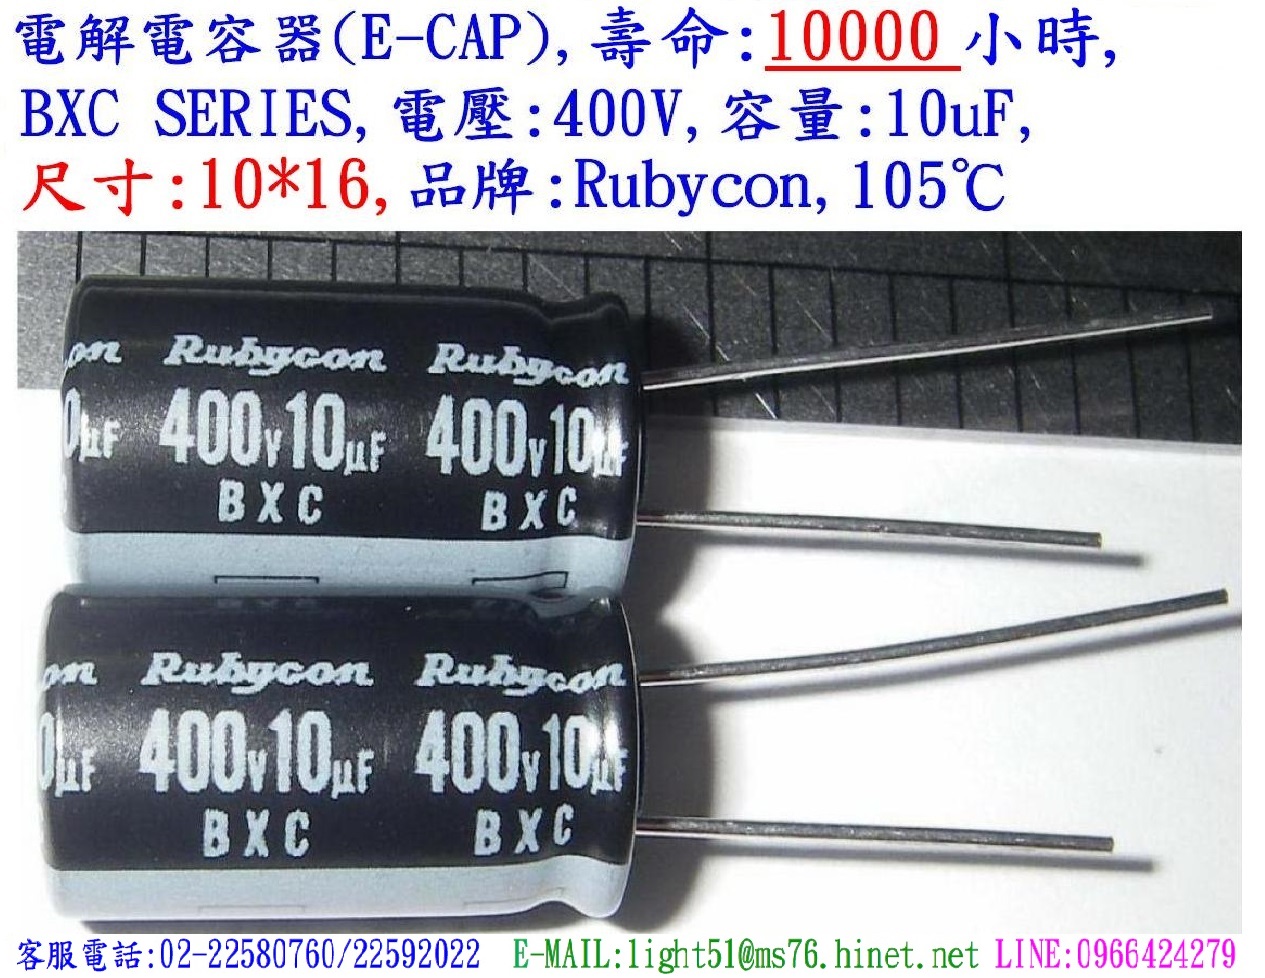 BXC,400V,10uF,尺寸:10*16,電解電容器,壽命:10000小時,Rubycon